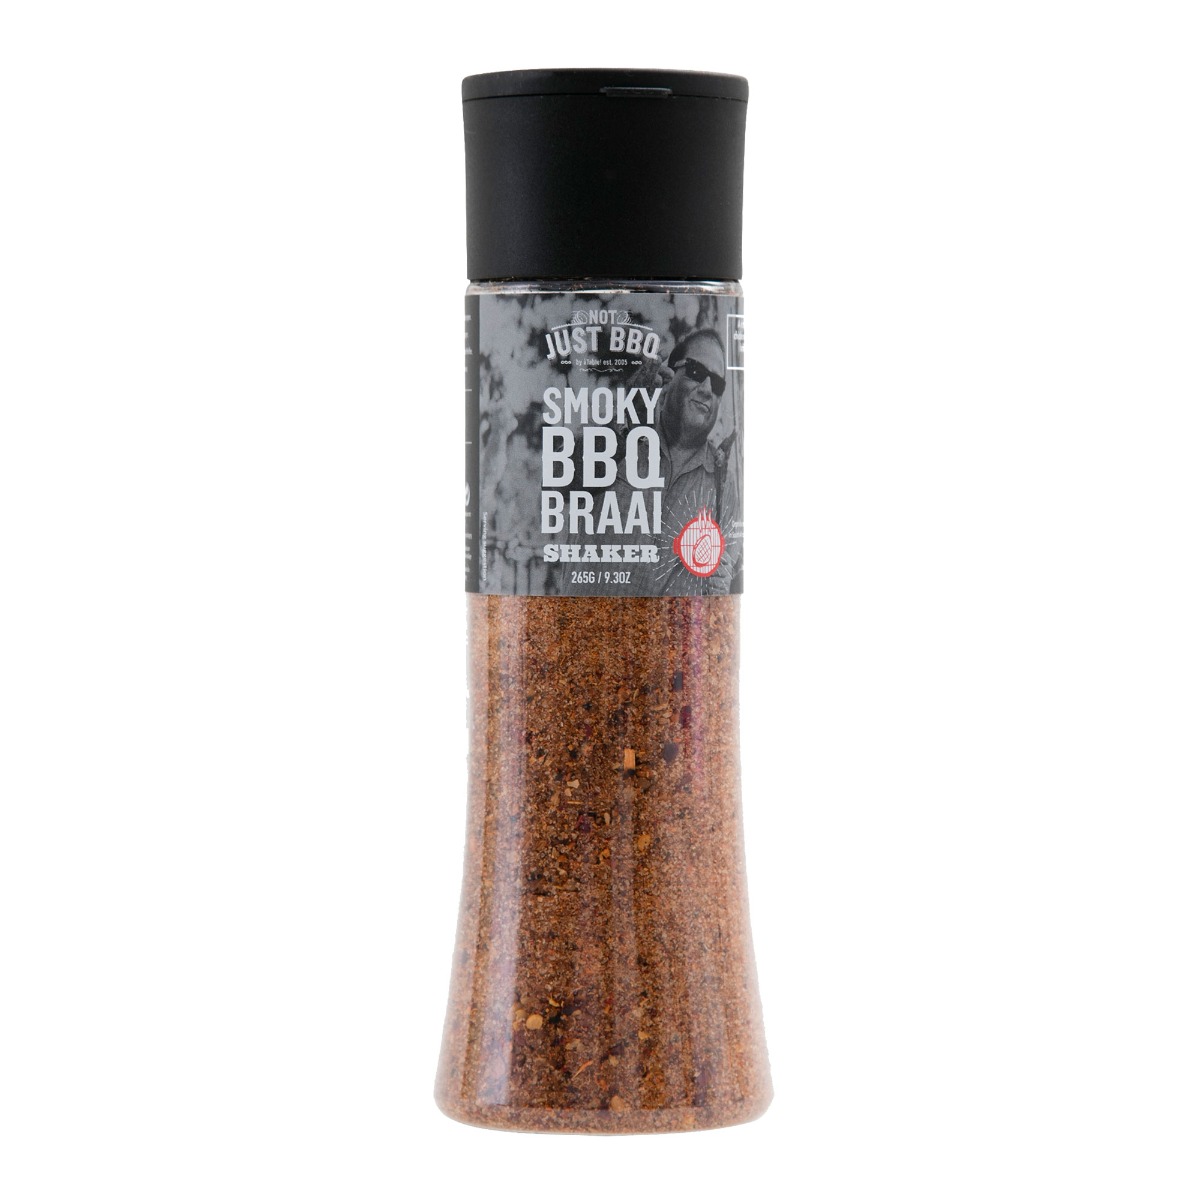 Smoky BBQ Braai Shaker, 265g – Not Just BBQ®